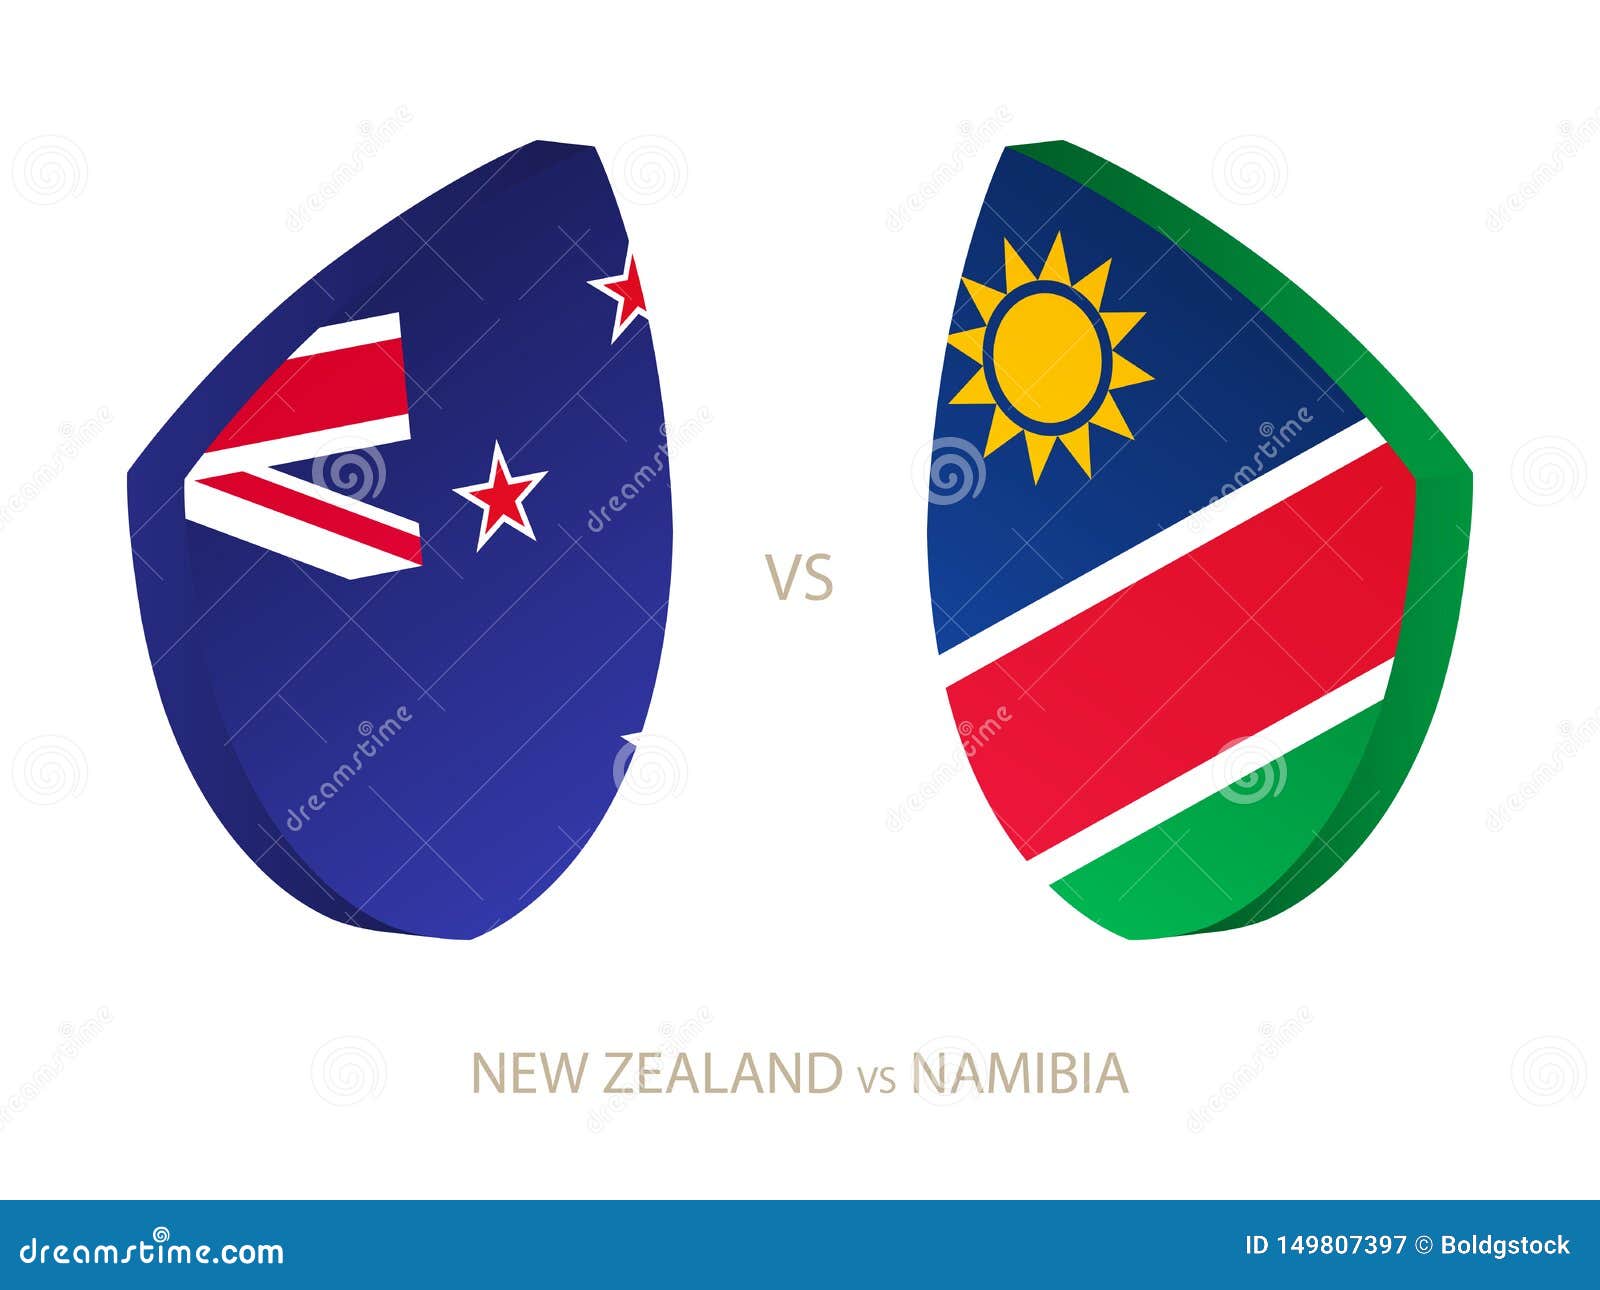 Namibia vs new zealand New Zealand